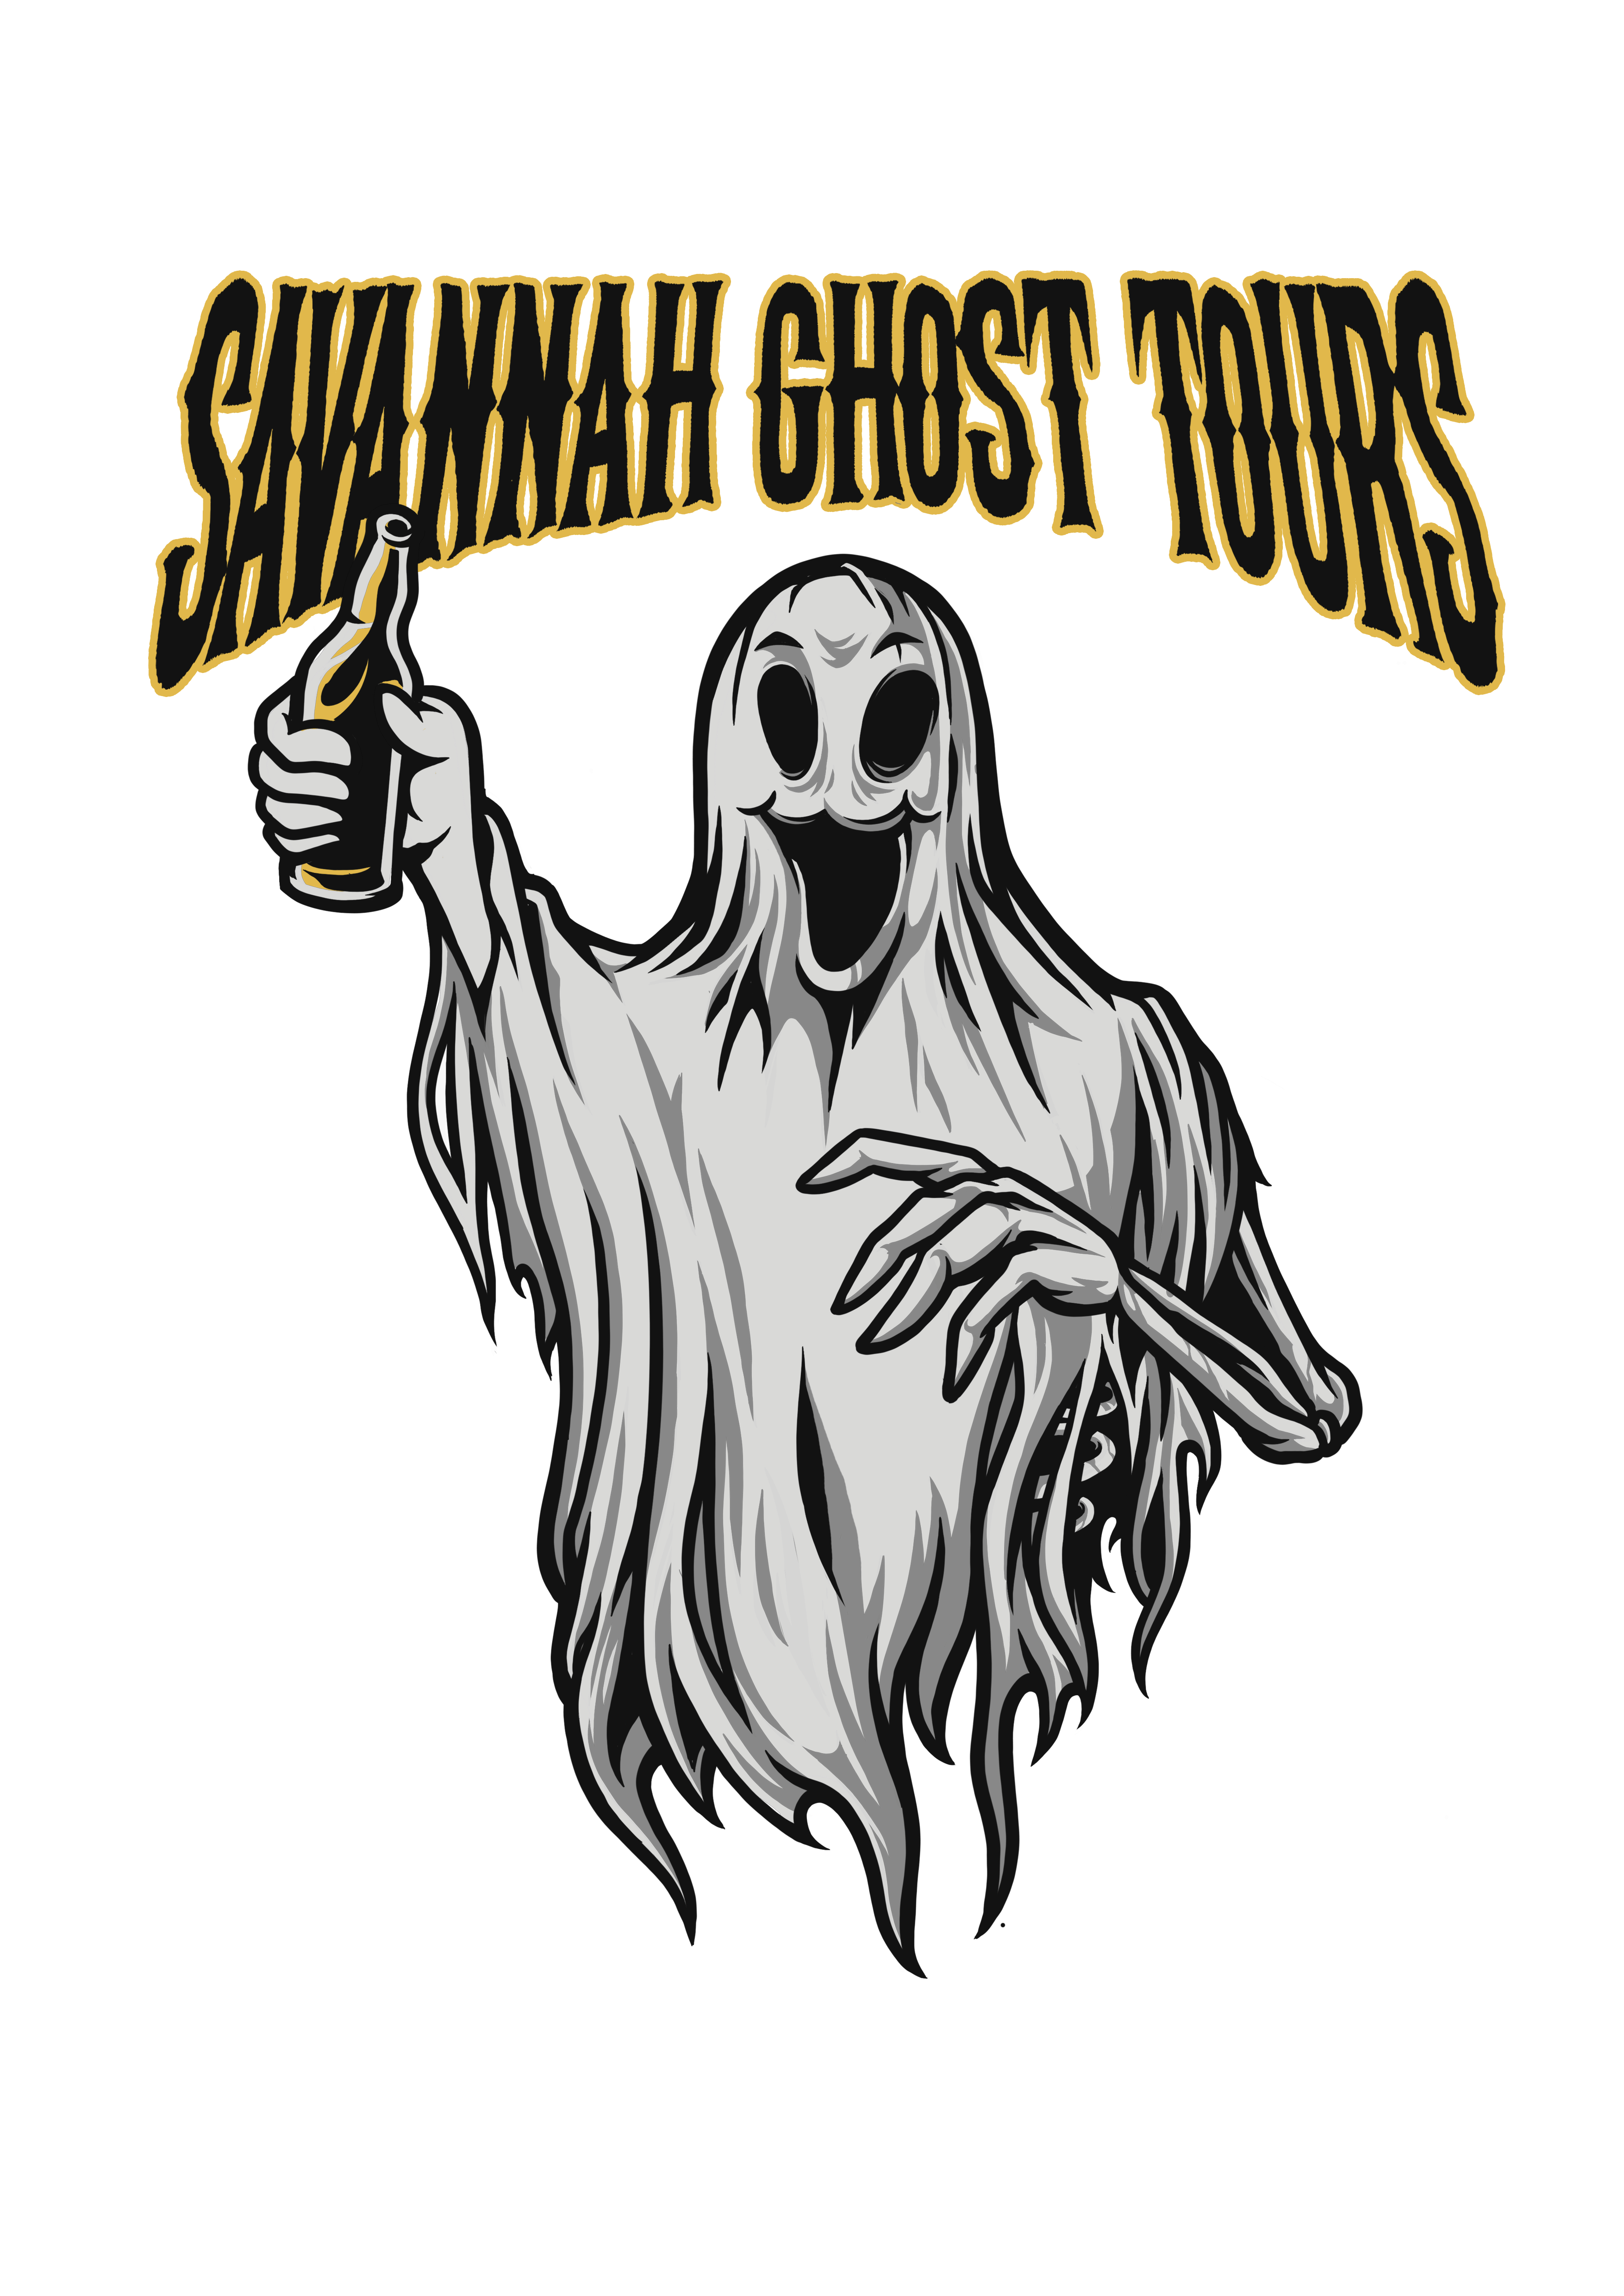 Savannah Ghost Tours